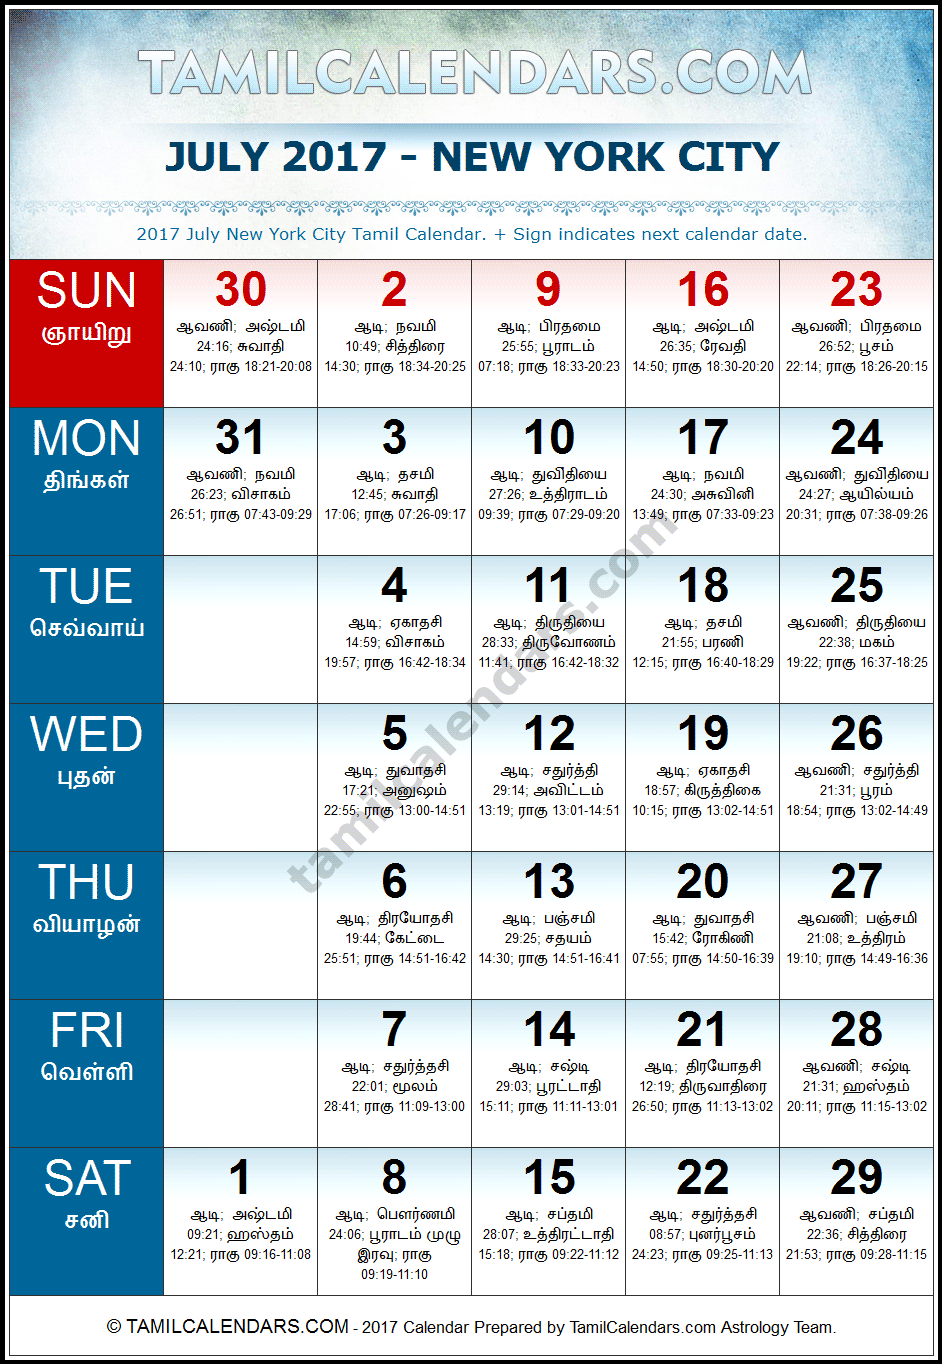 July 2017 Tamil Calendar for New York, USA